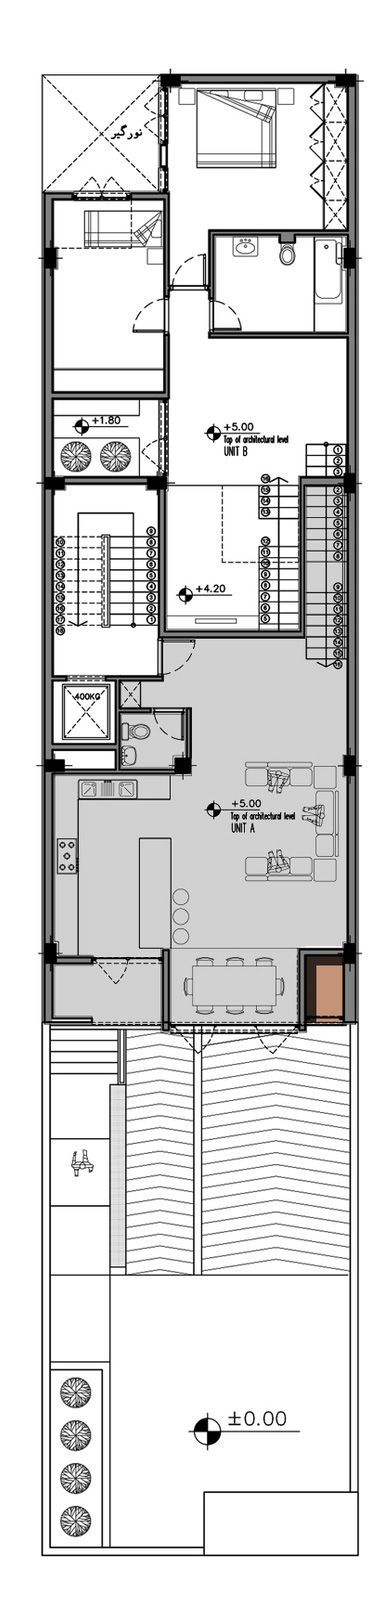 First Floor Plan of Juan Apartment